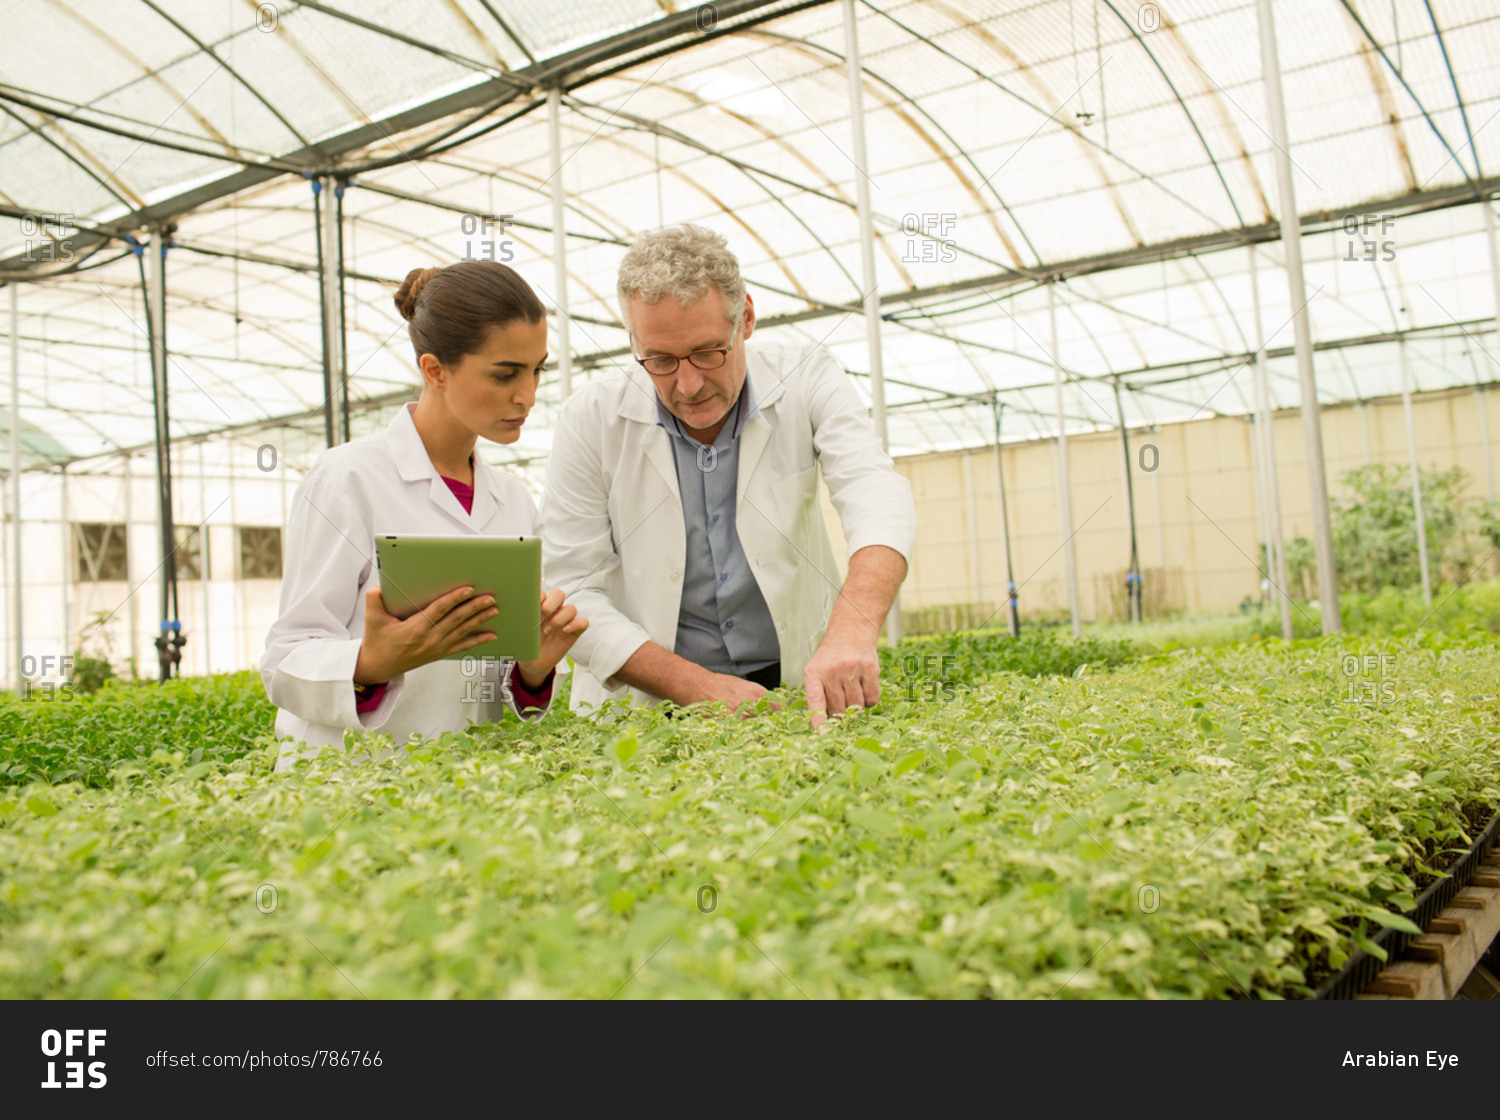 Botanists analyzing plants at greenhouse.